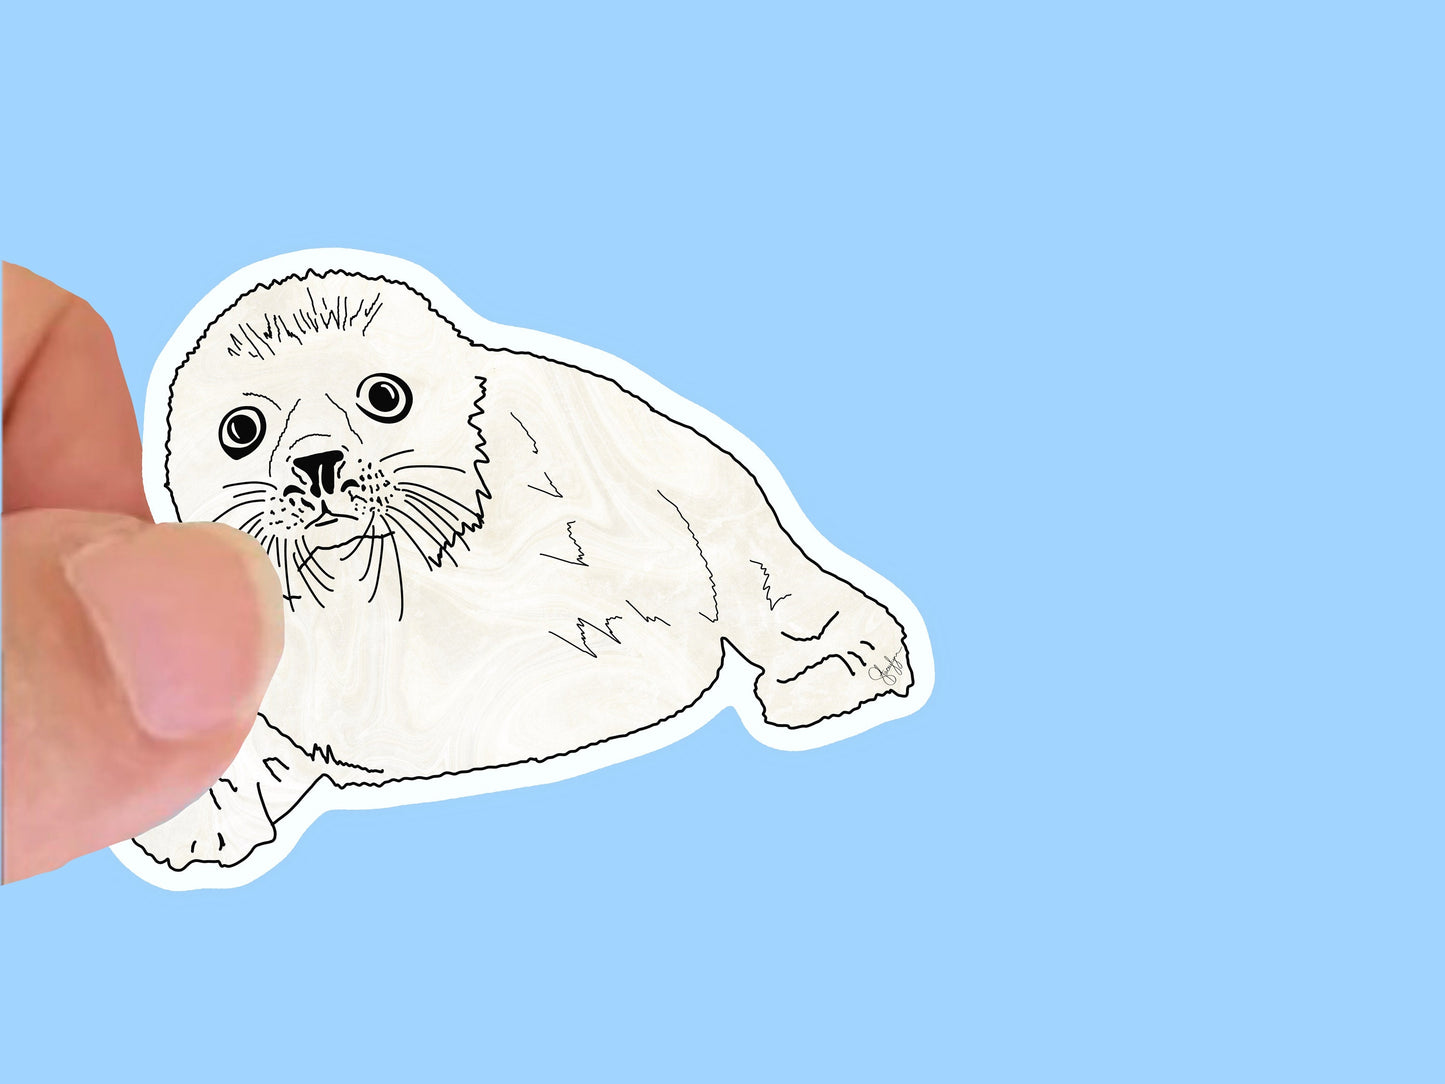 White Polar Seal  Waterproof Sticker, Water Bottle decal, Laptop sticker, animal Stickers,